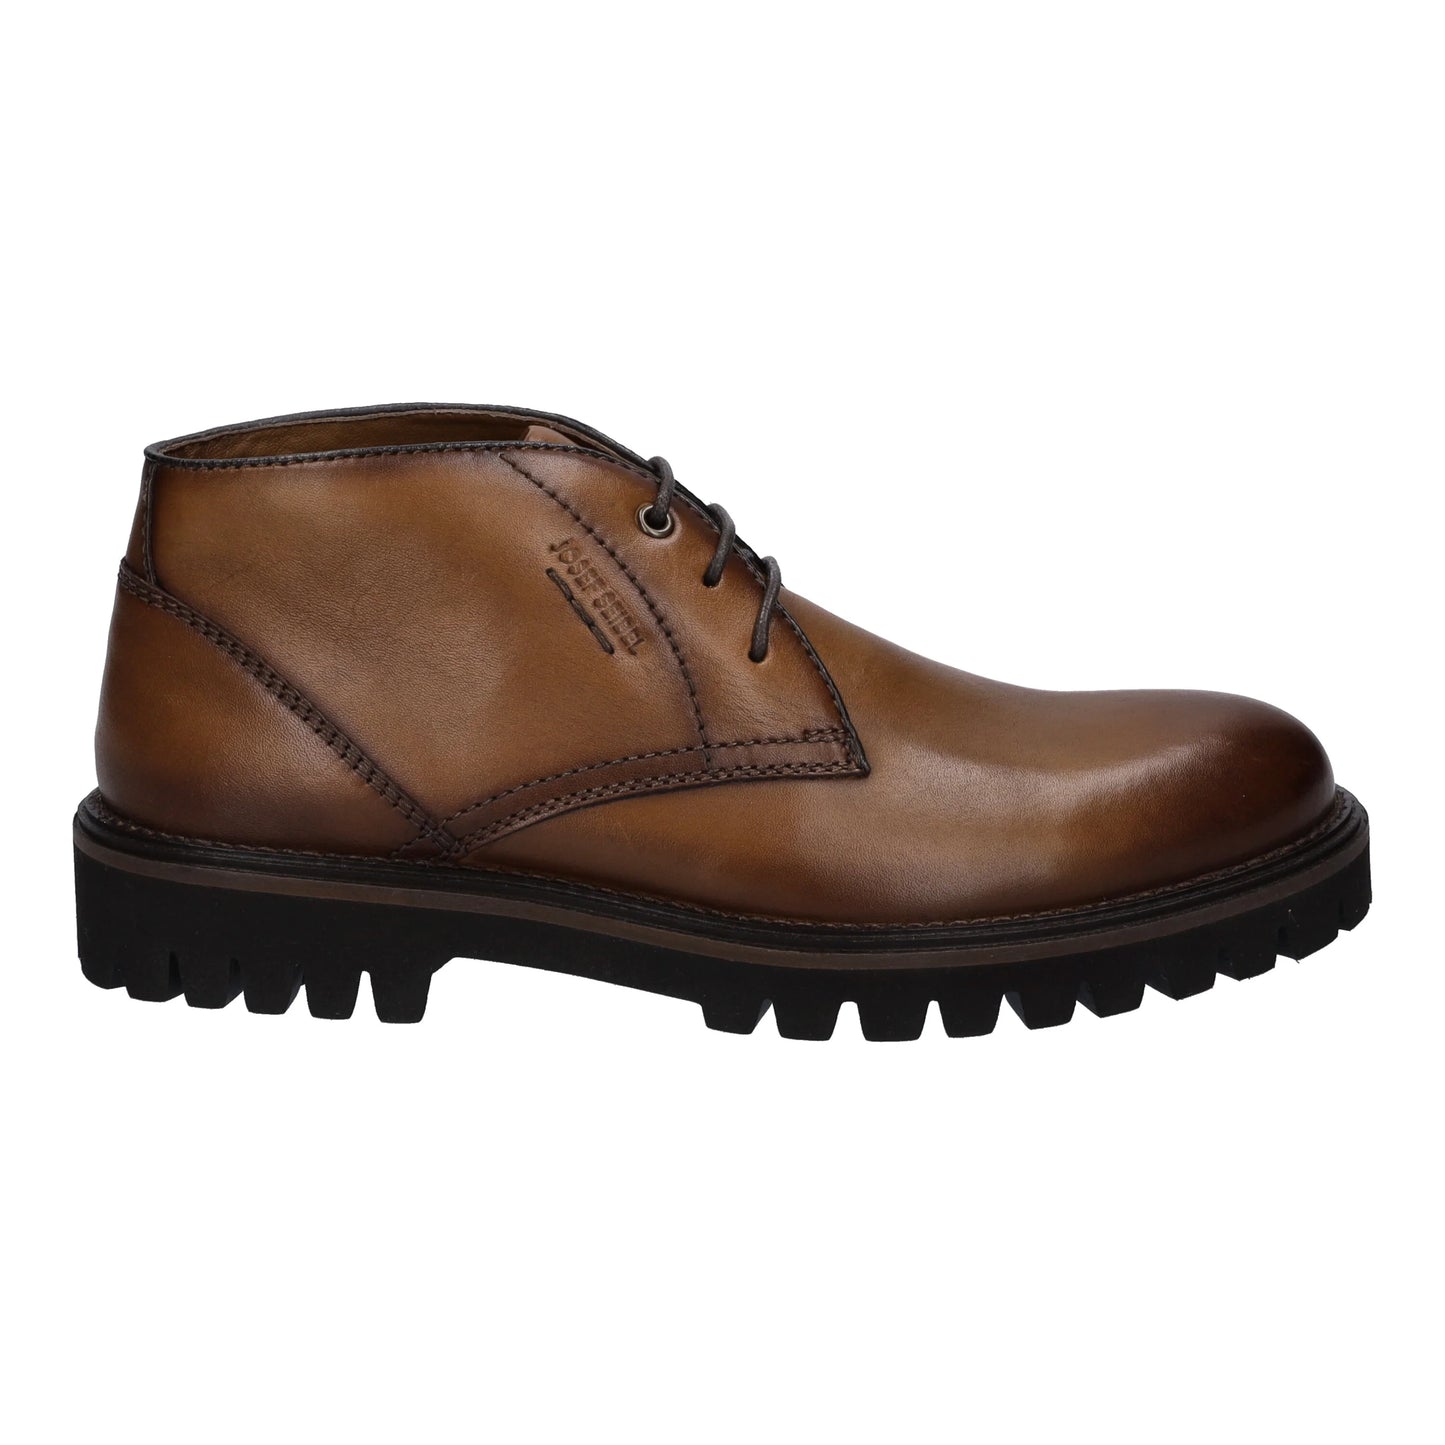 Josef Seibel Men's Romed 03 Leather Lace-Up Boots Cognac Brown